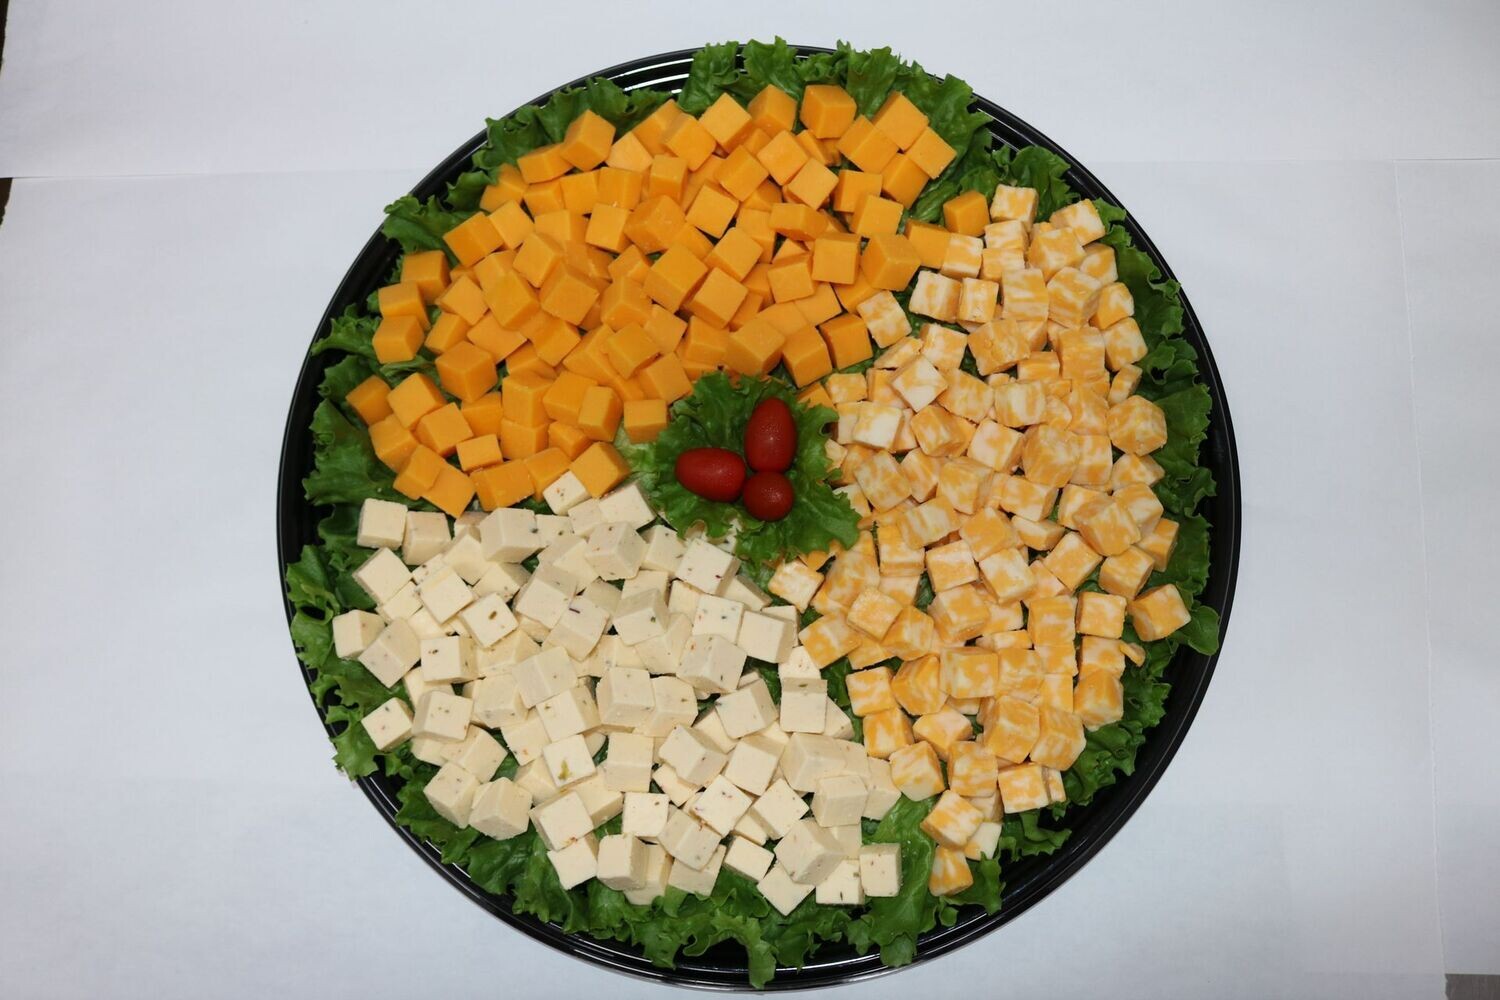 Pruski's Three Cheese Tray [Small]